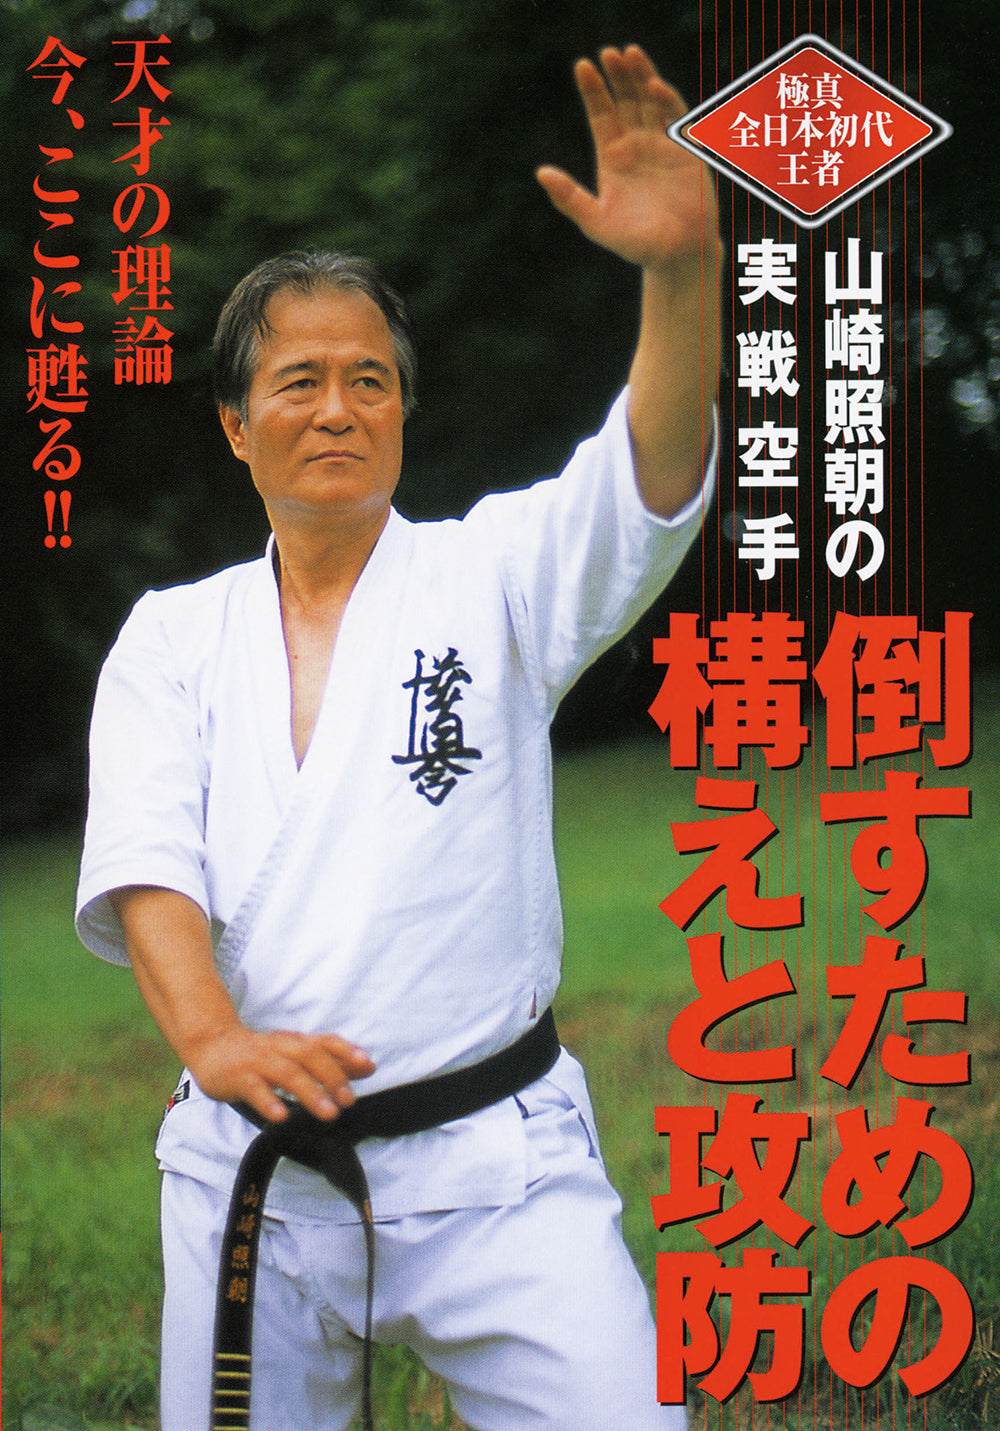 Real Karate for Offense & Defense DVD by Akira Yamazaki